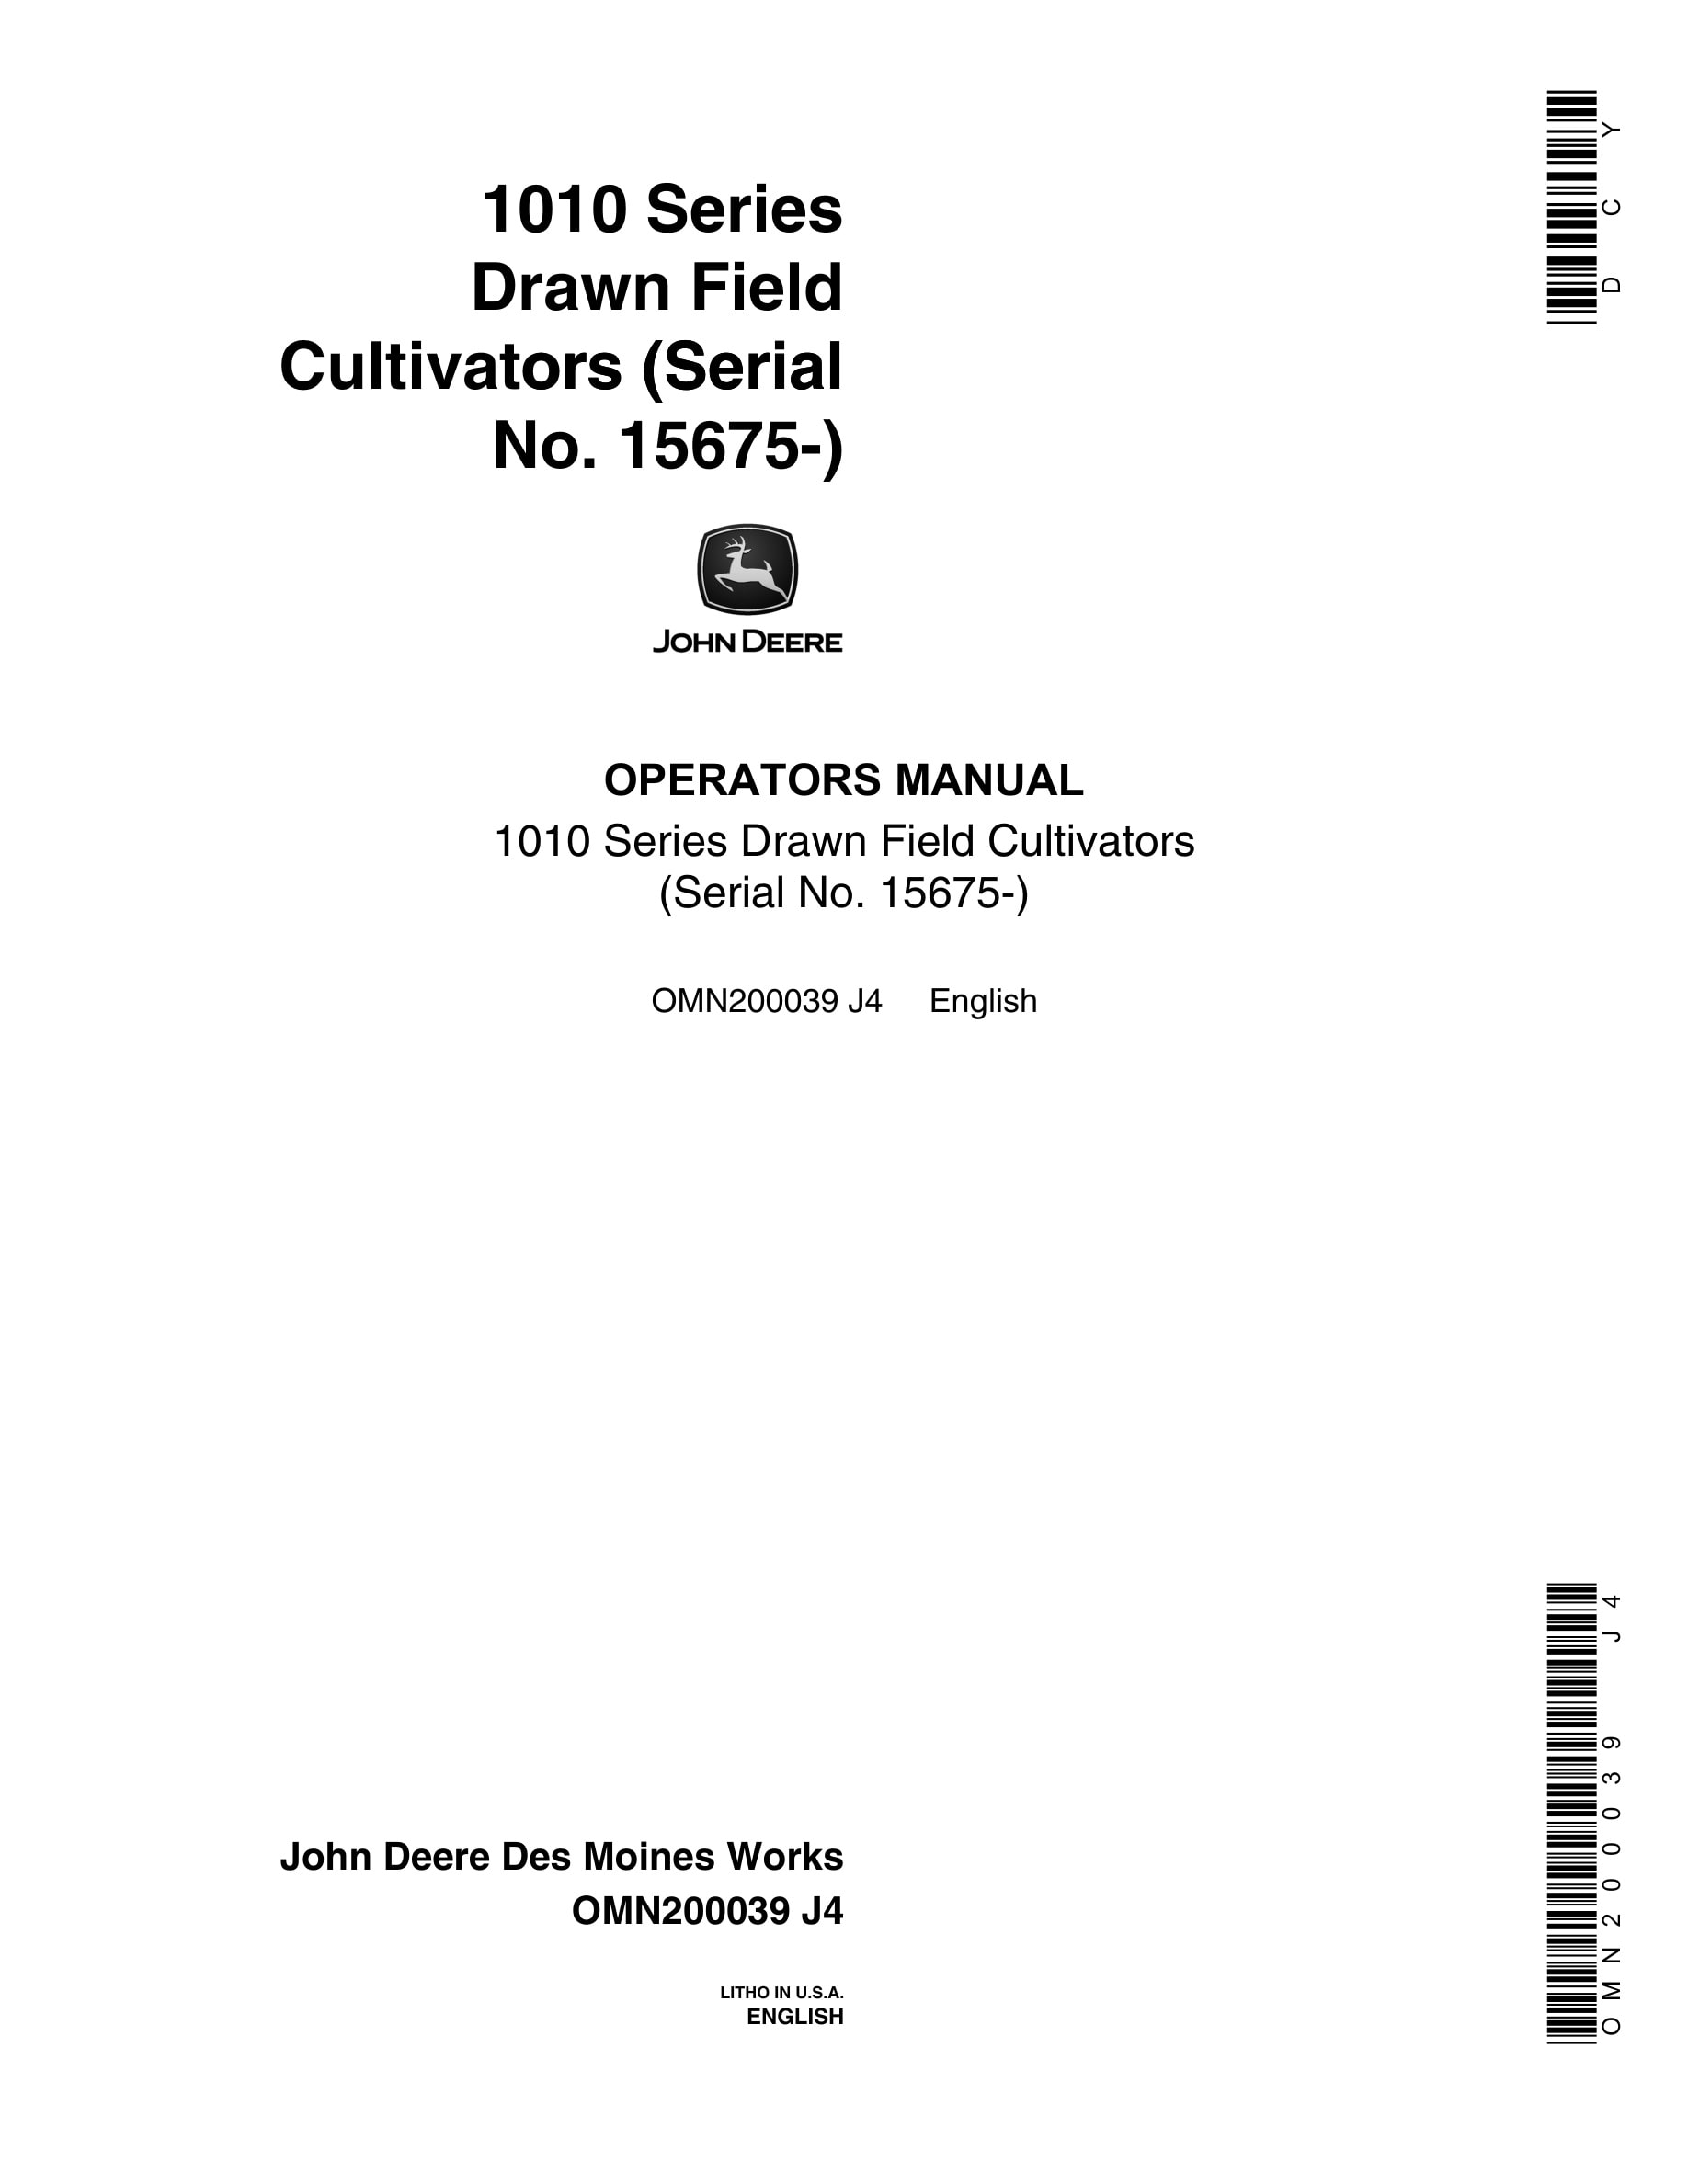 John Deere 1010 Series Drawn Field CULTIVATOR Operator Manual OMN200039-1